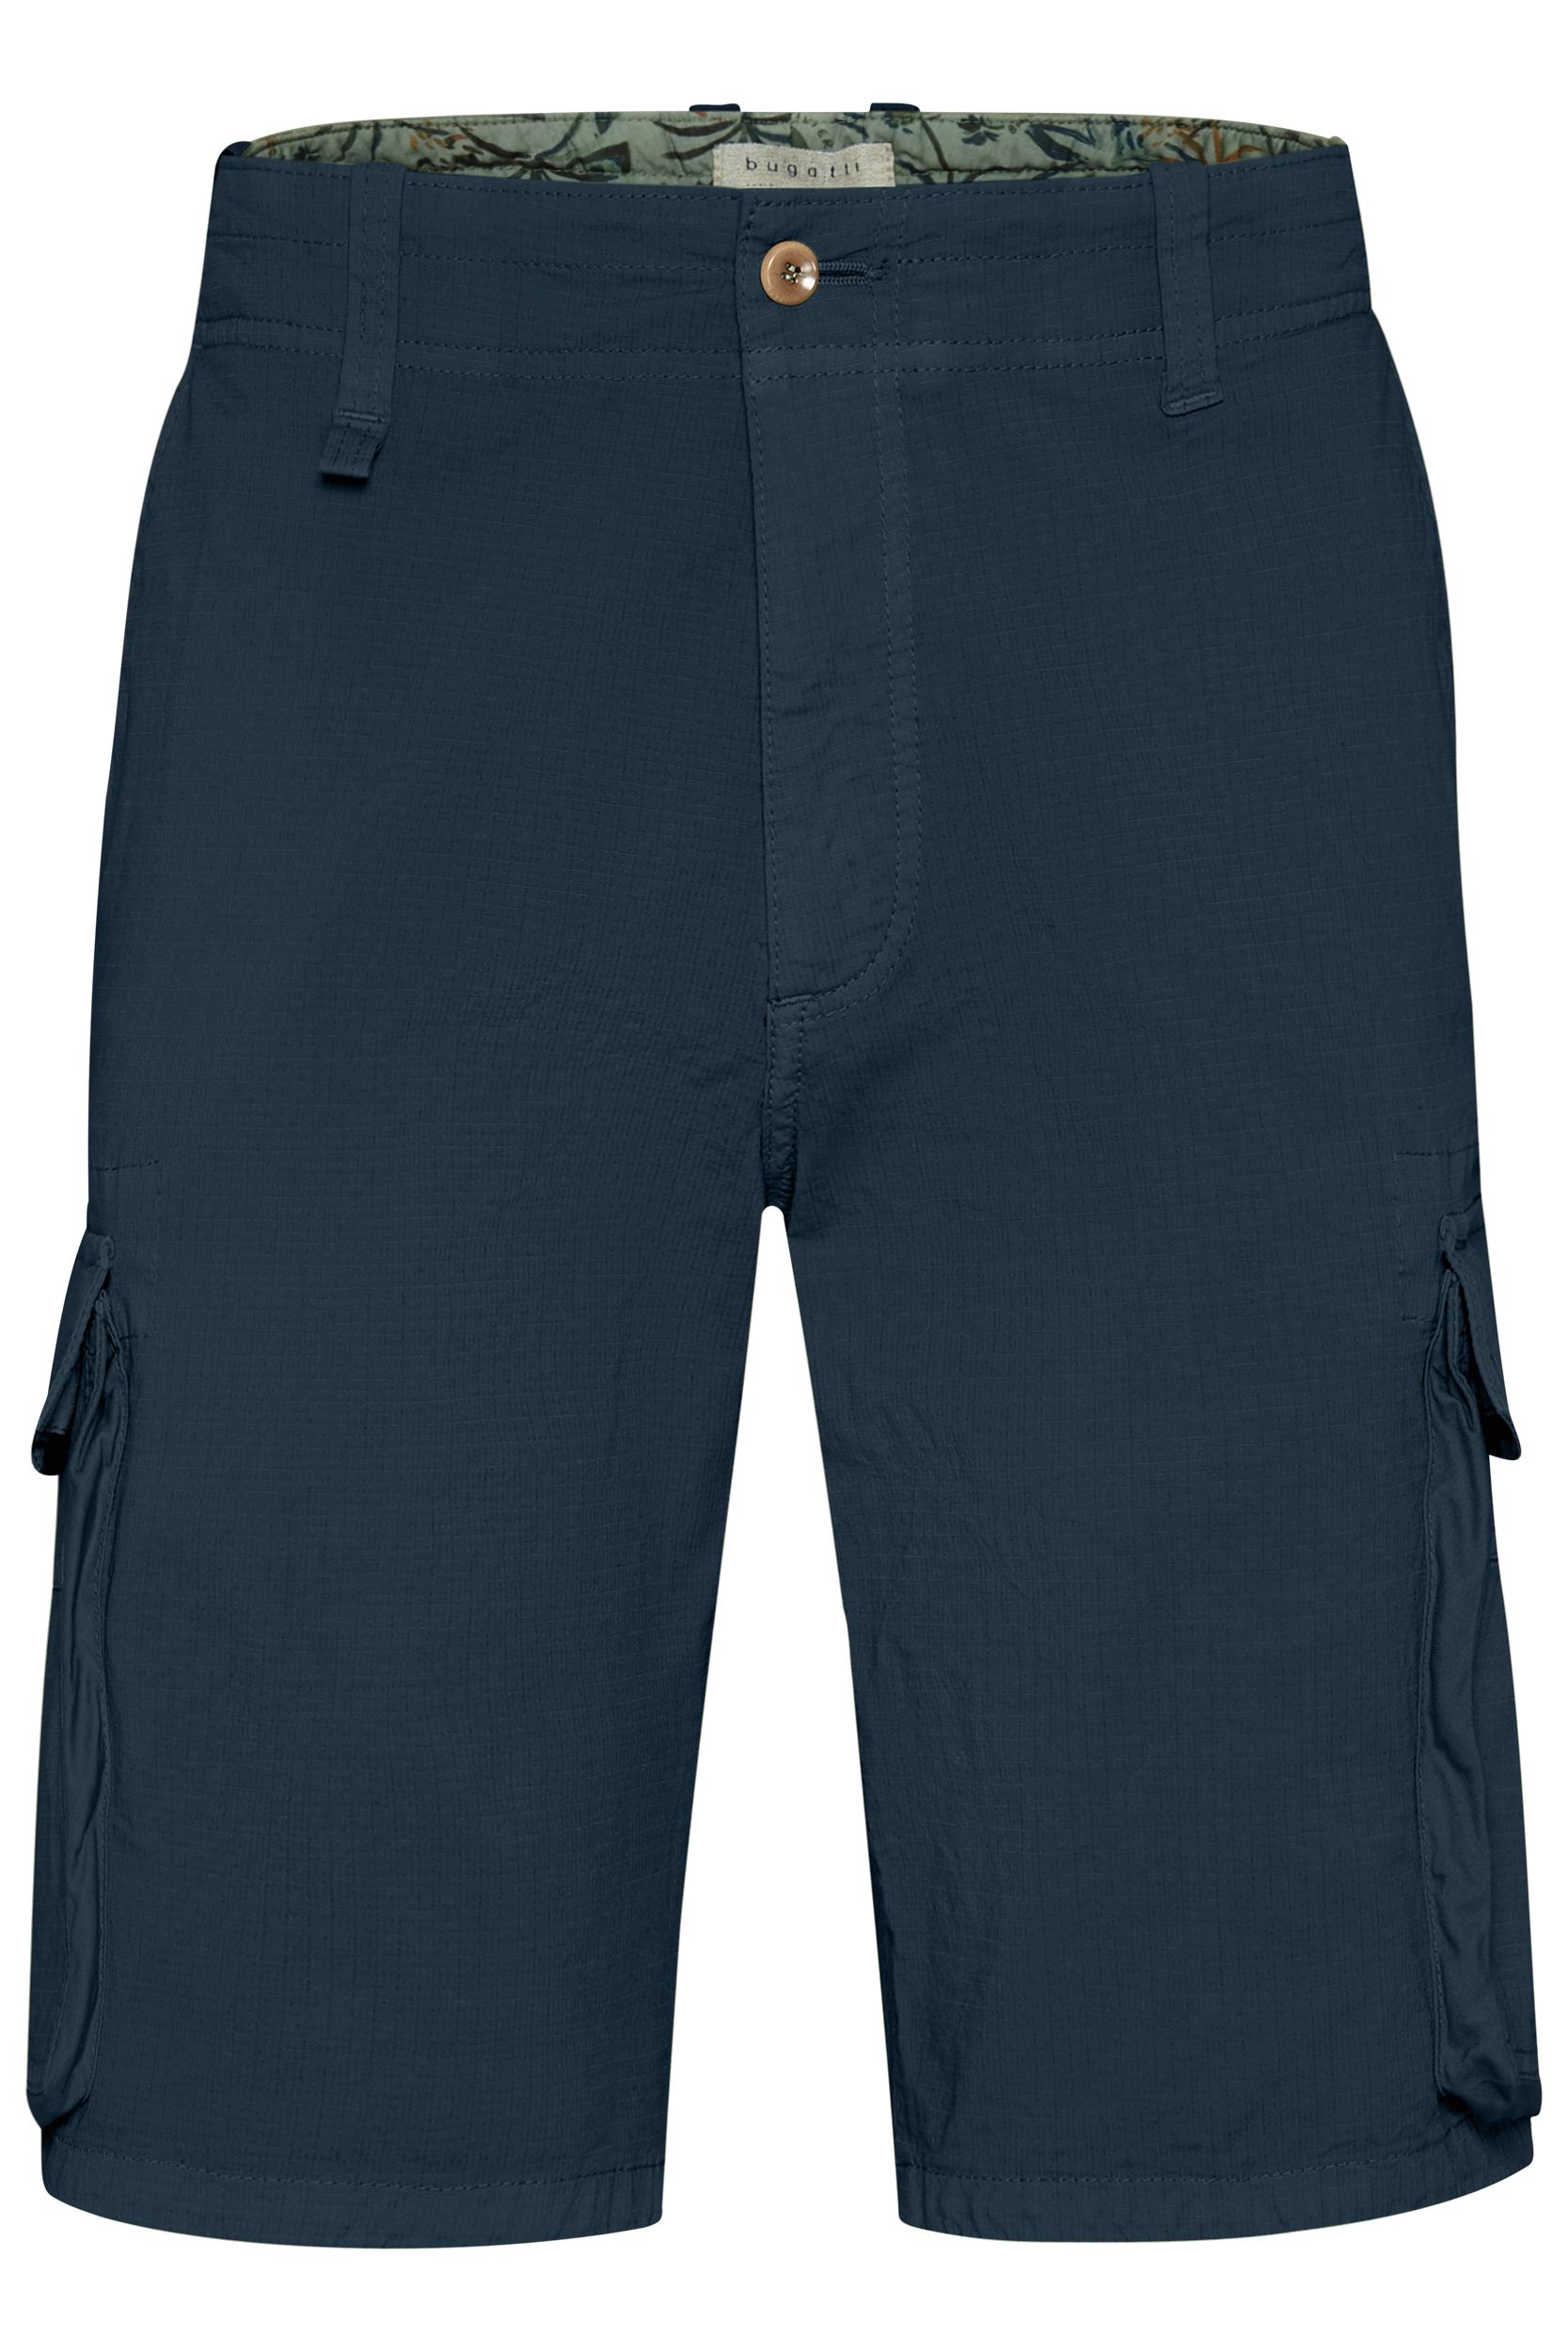 Bugatti clothing Short Donker blauw 086203-001-56